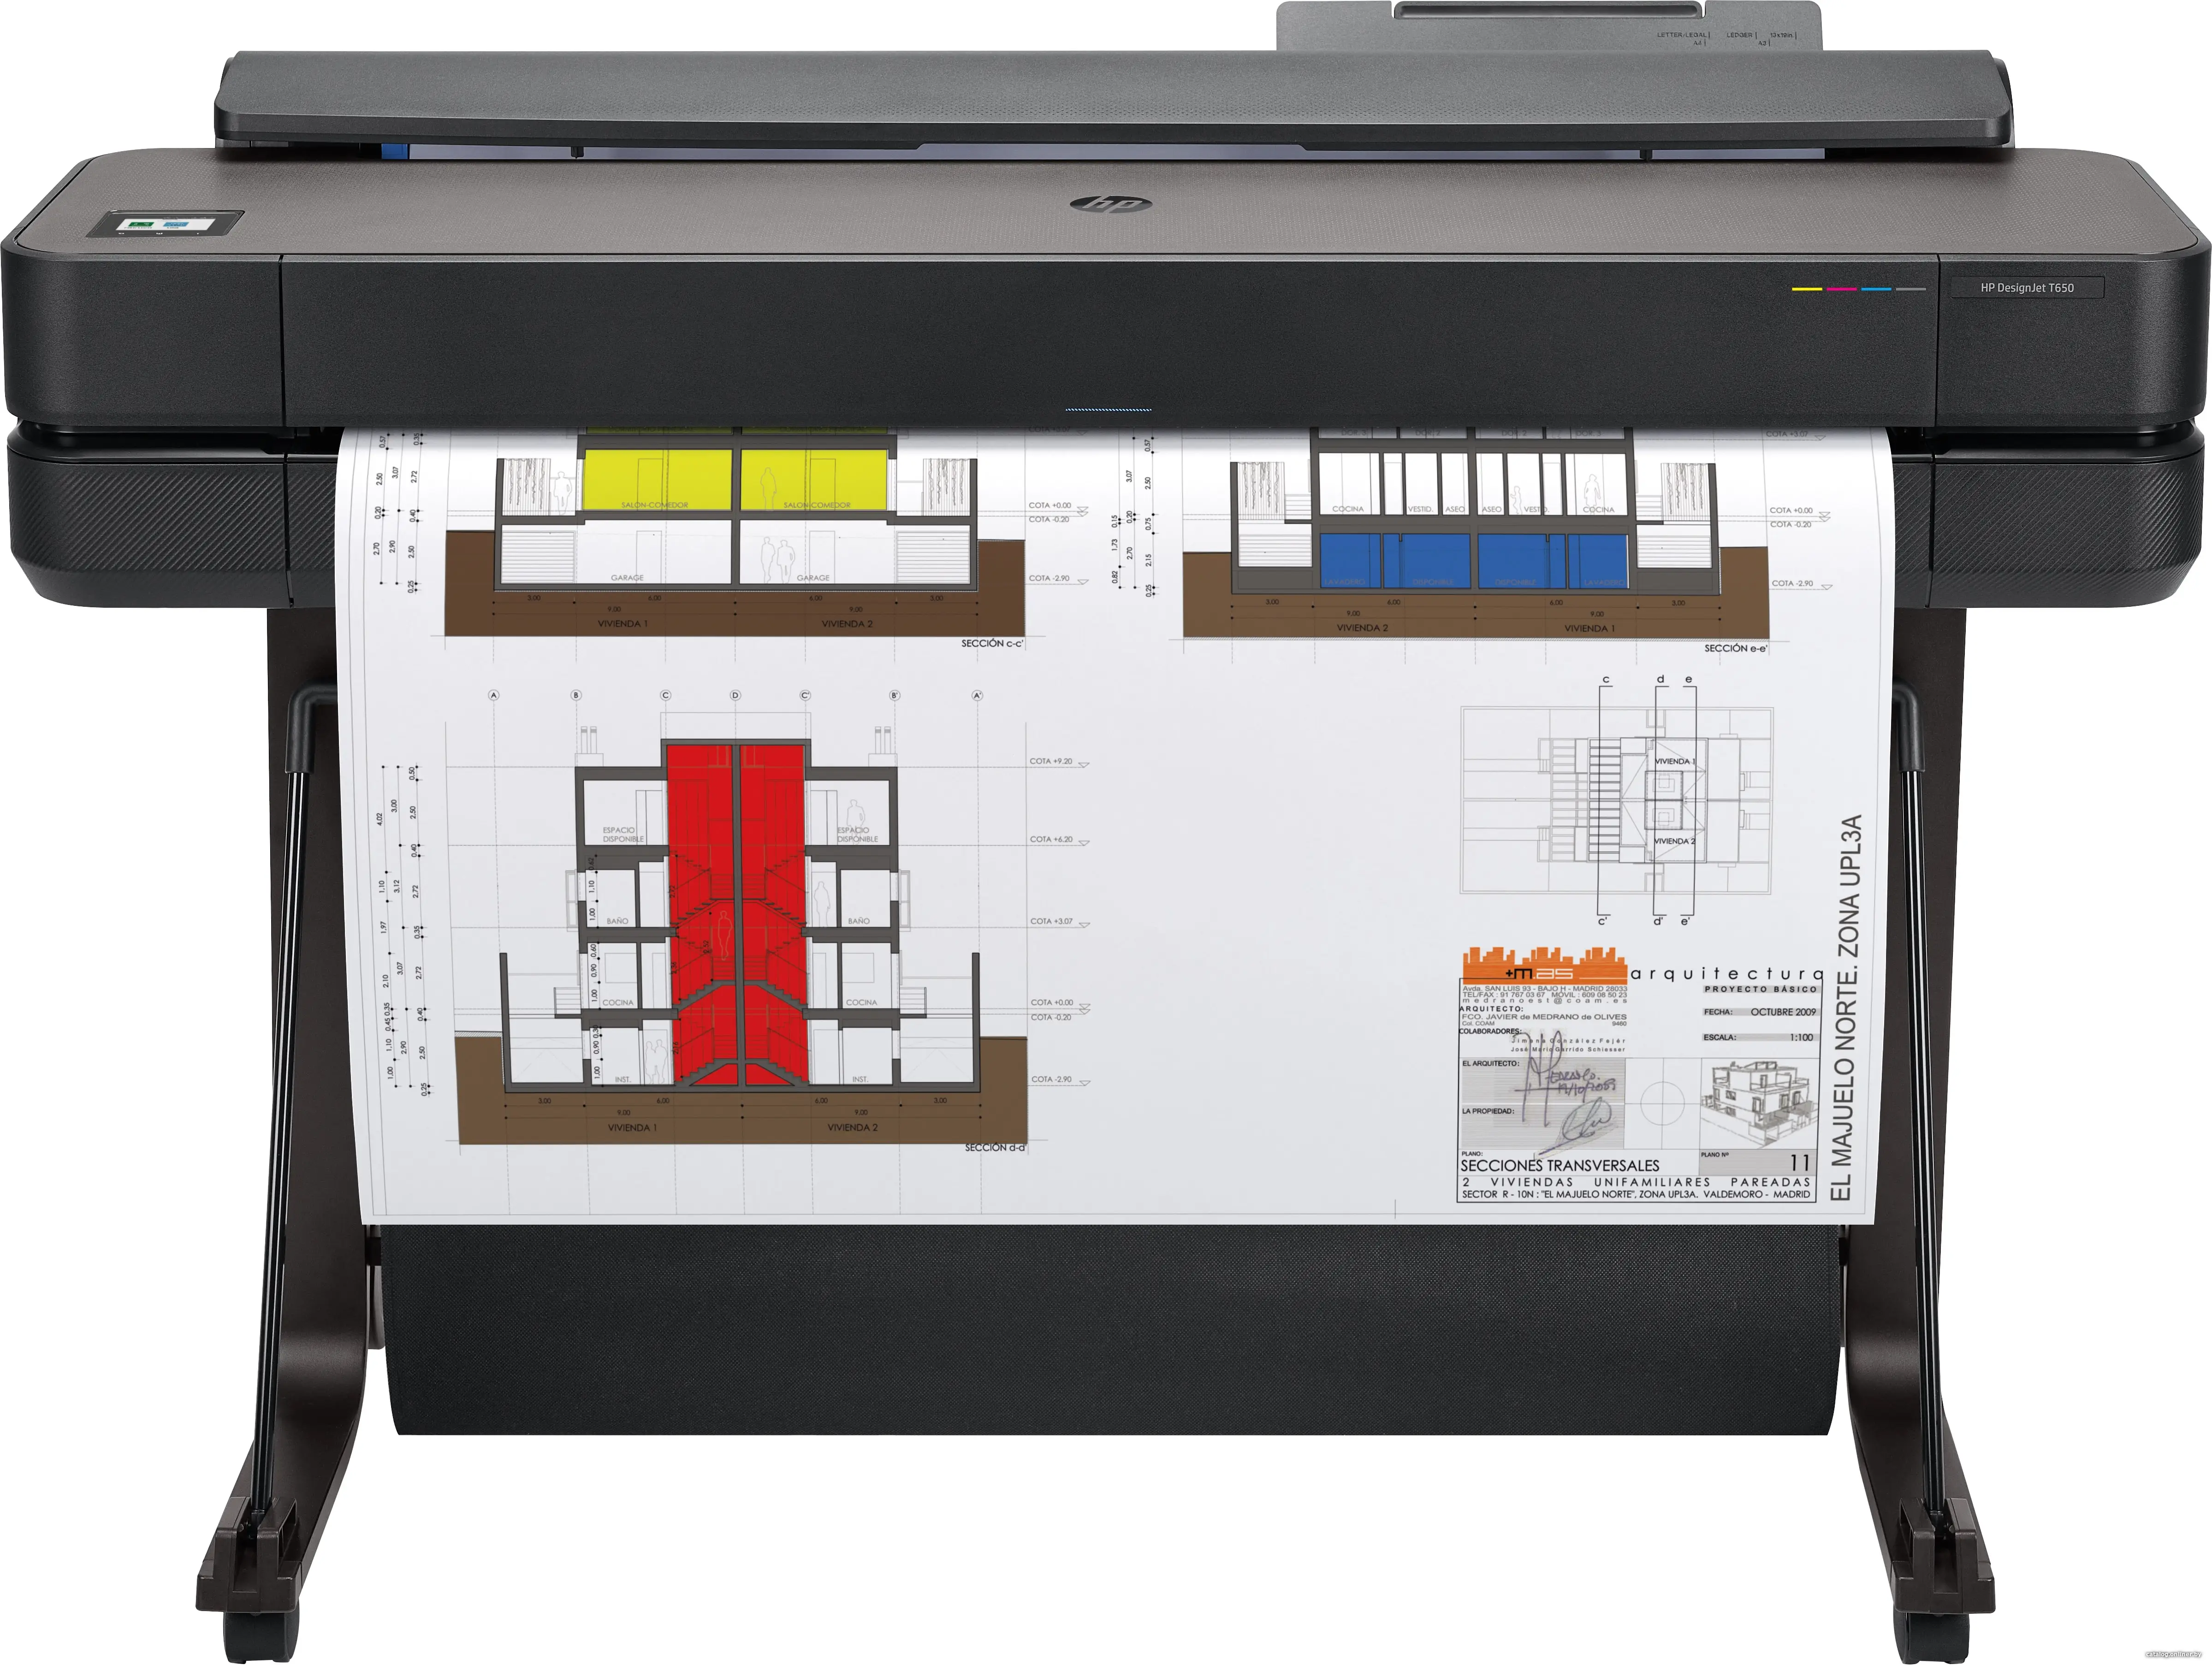 Купить HP DesignJet T650 36-in Printer плоттер, цена, опт и розница